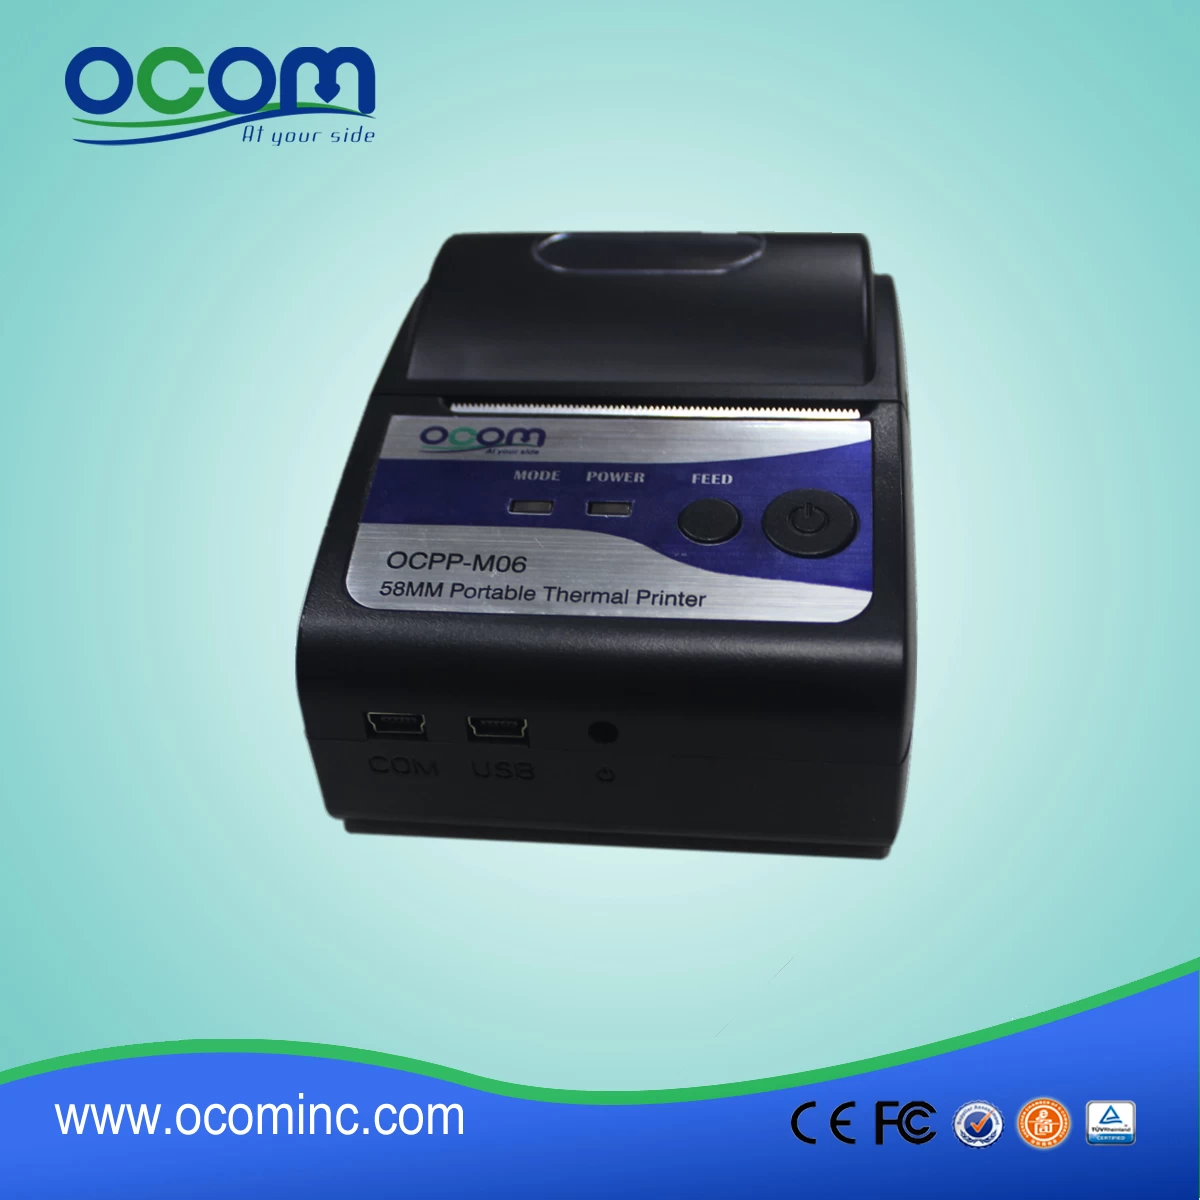 OCPP-M06 Android Mini USB Receipt Thermal Mobile Printer